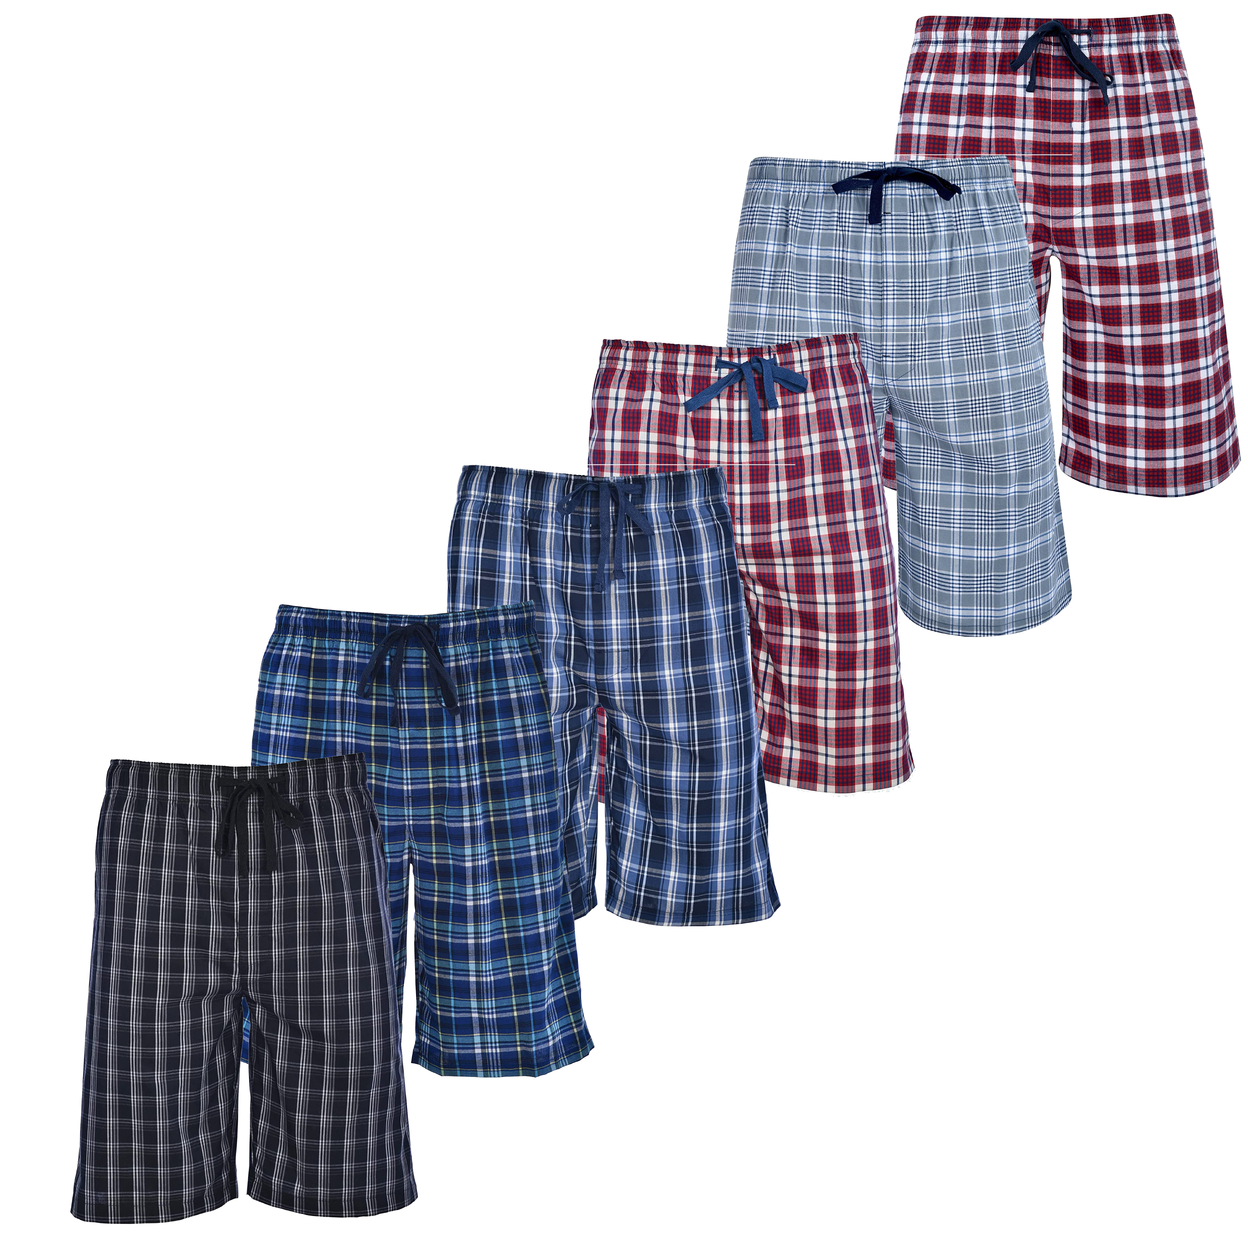 Multi-Pack: Men's Ultra Soft Plaid Lounge Pajama Sleep Wear Shorts - 1-pack, Small